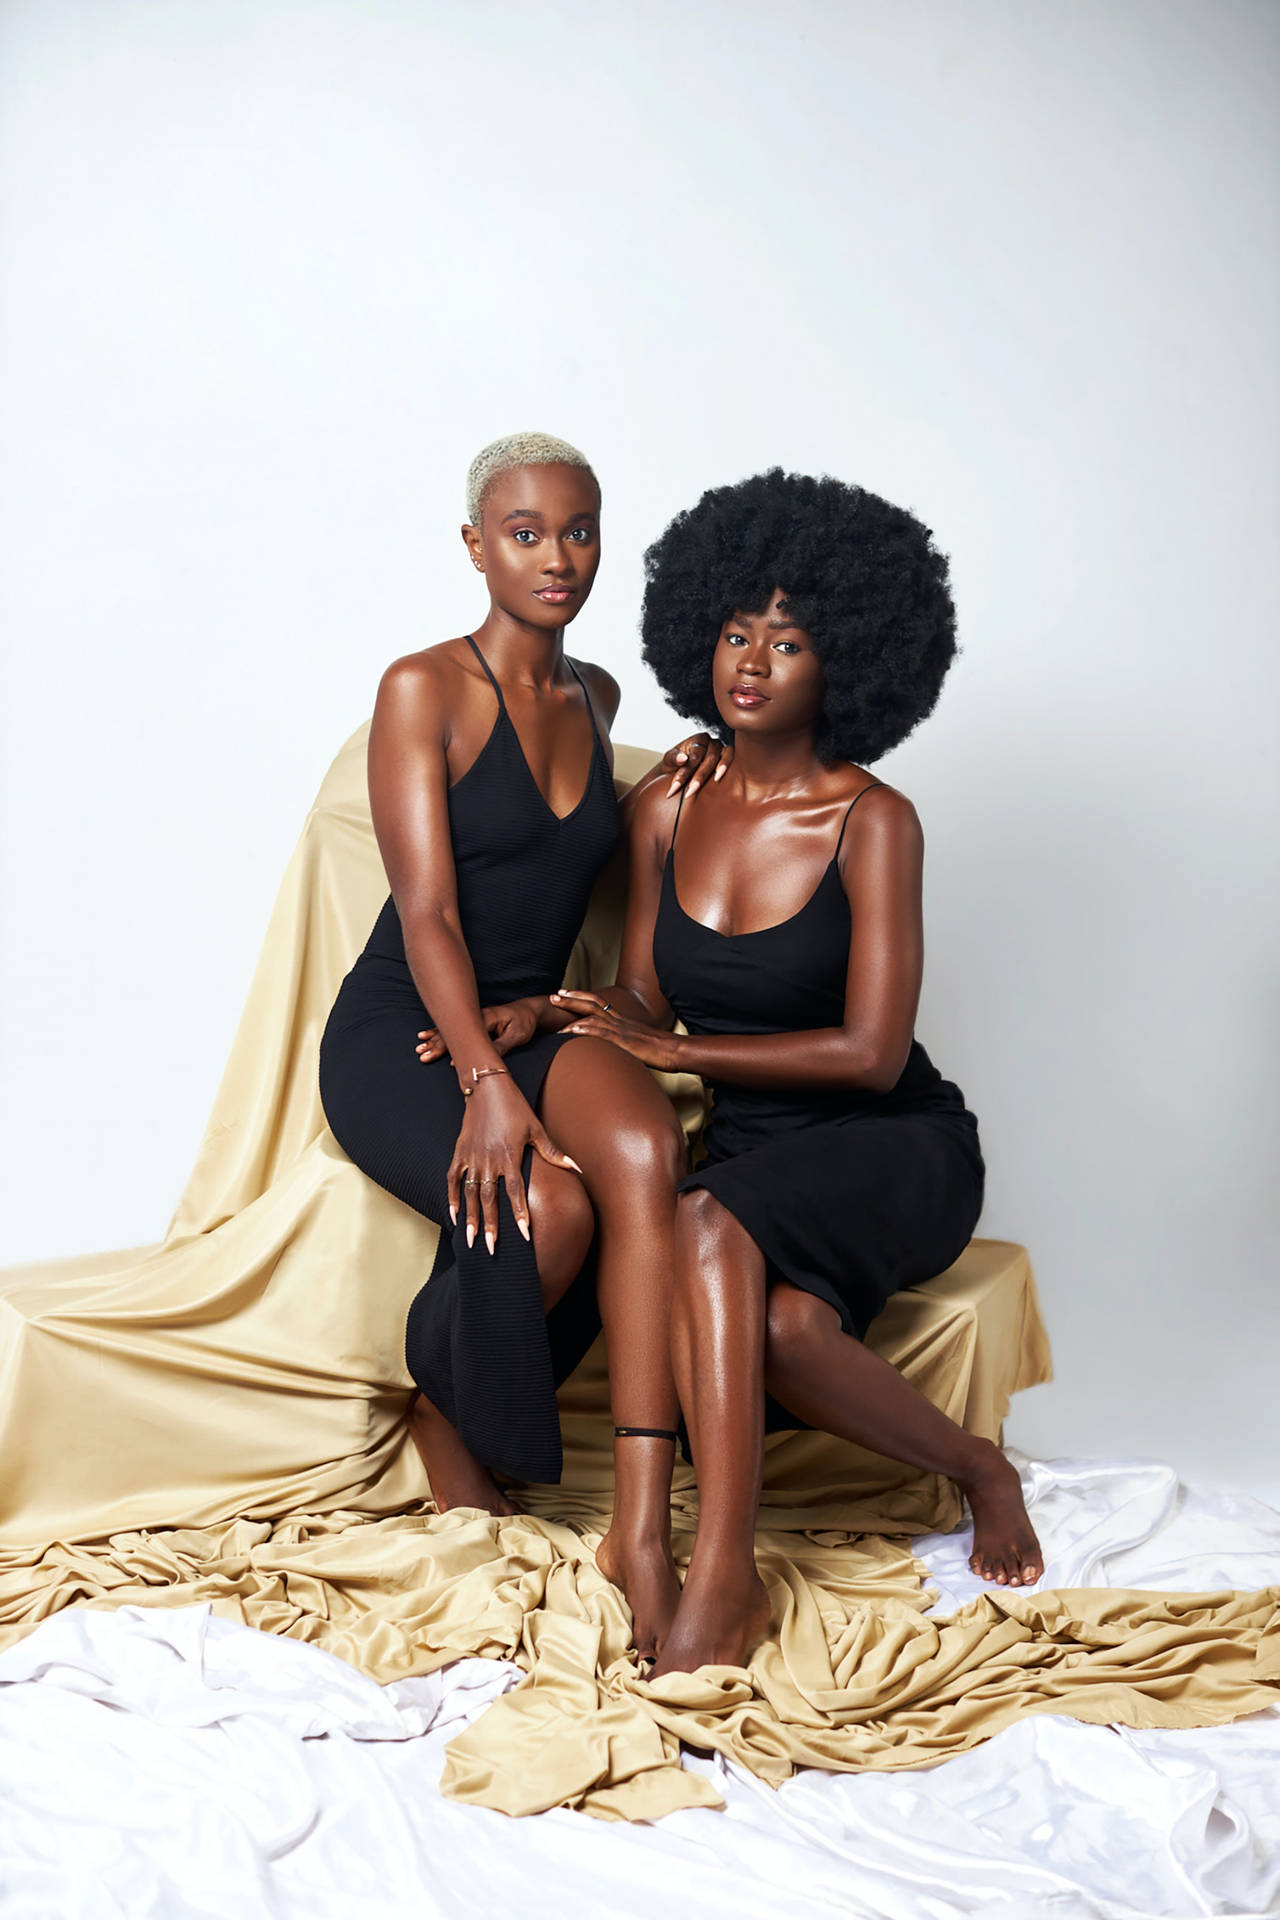 Top Sexy Black Women Wallpaper Full Hd K Free To Use